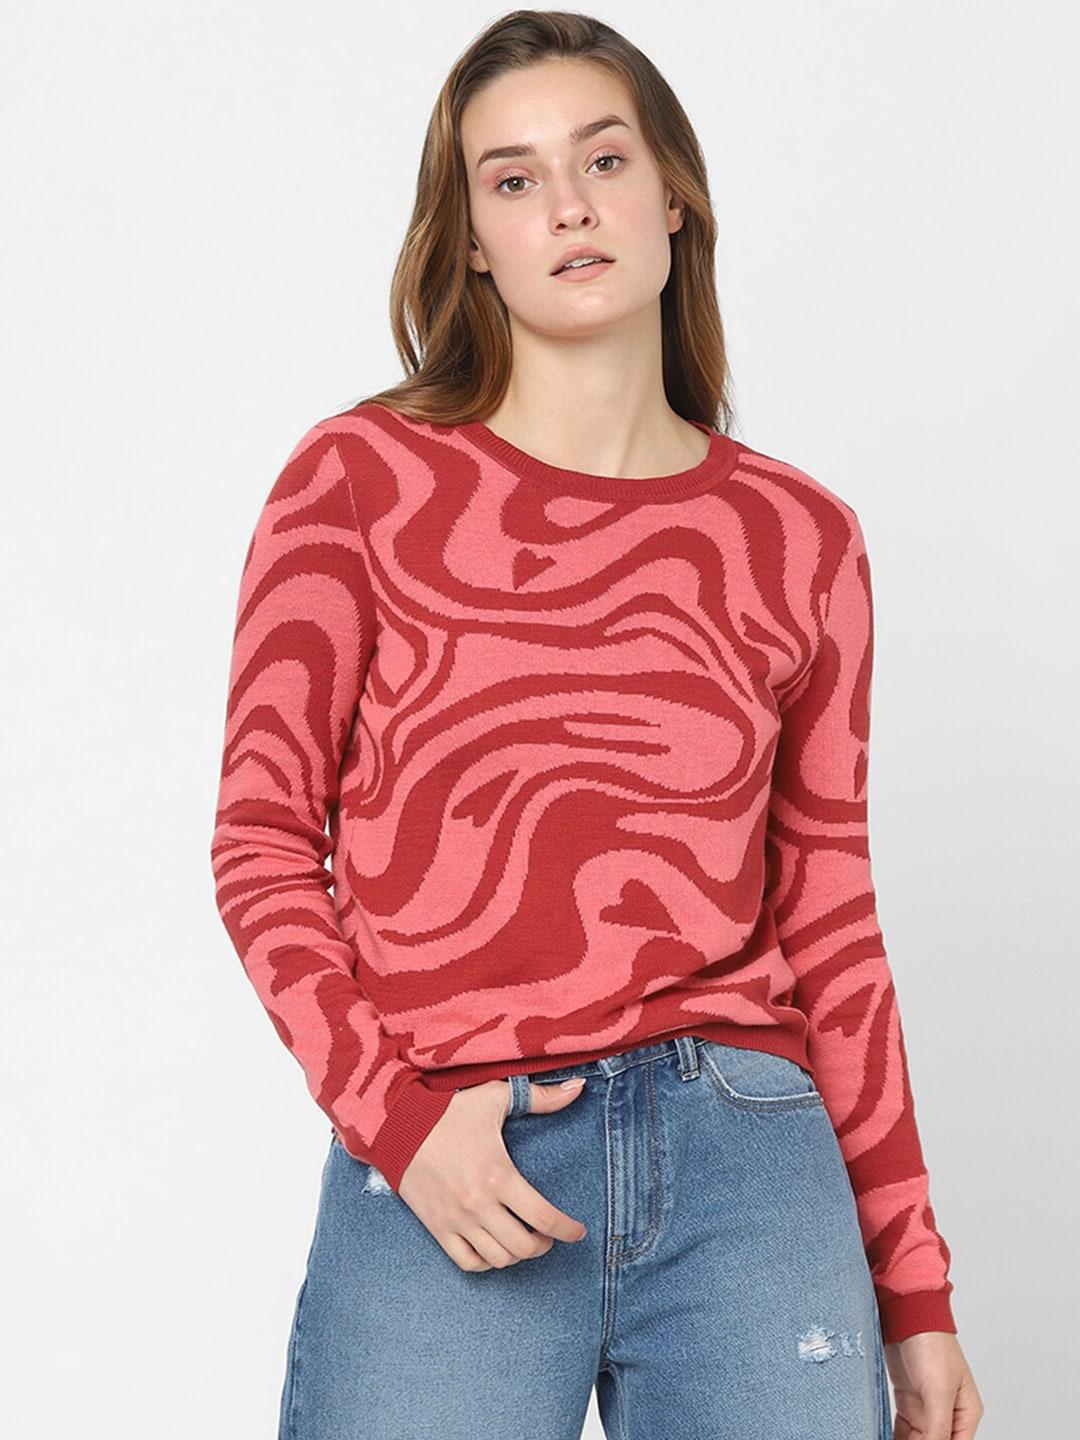 vero moda women pink & red printed pullover